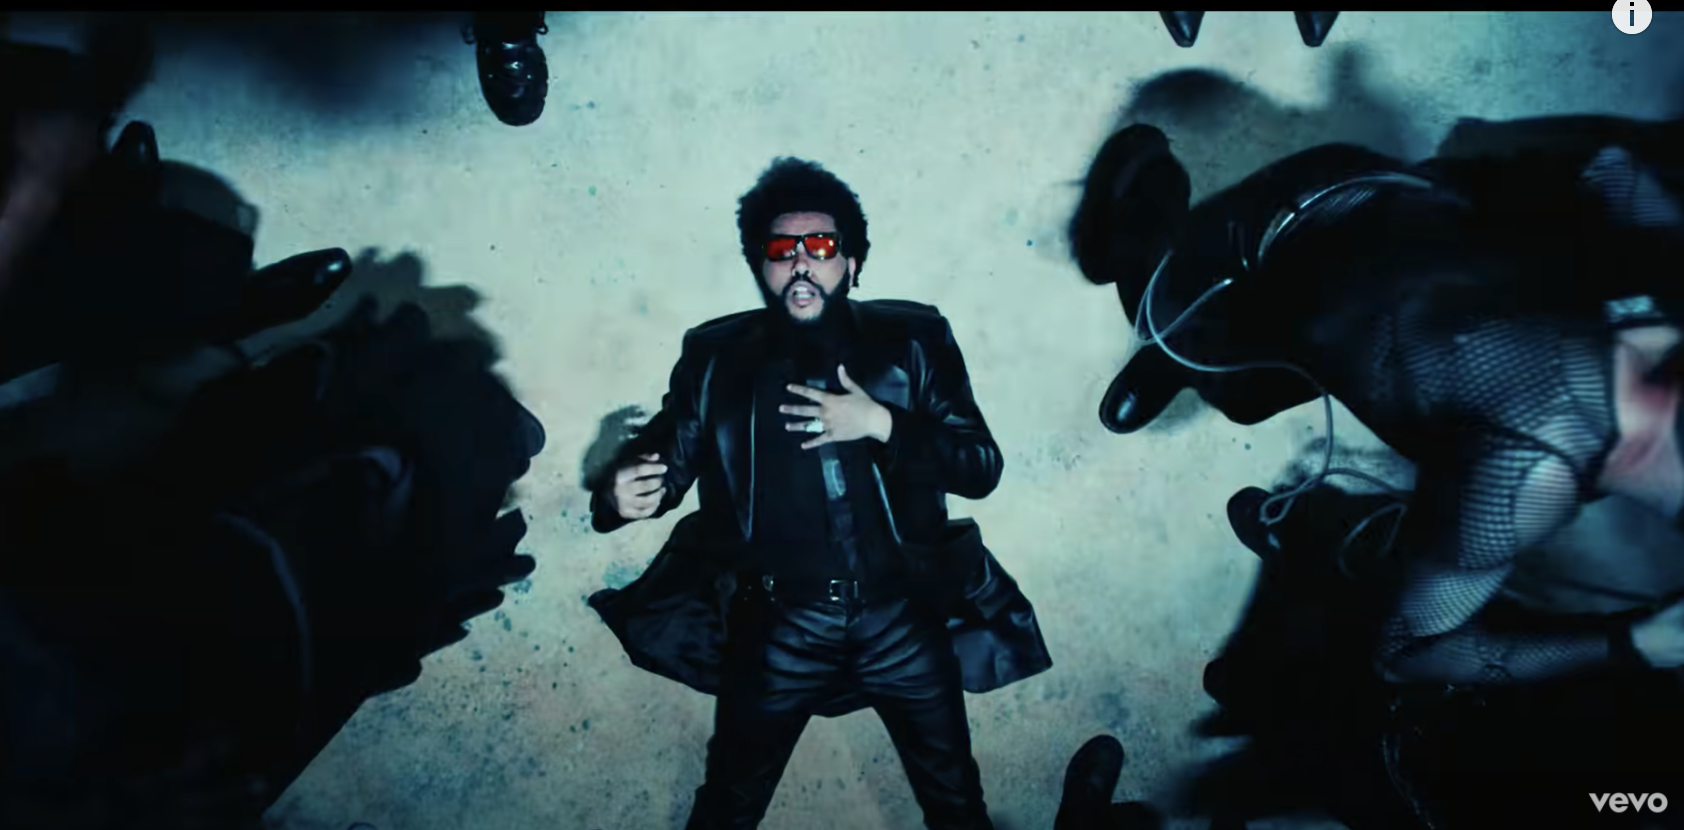 The Weeknd - Sacrifice - video Dailymotion